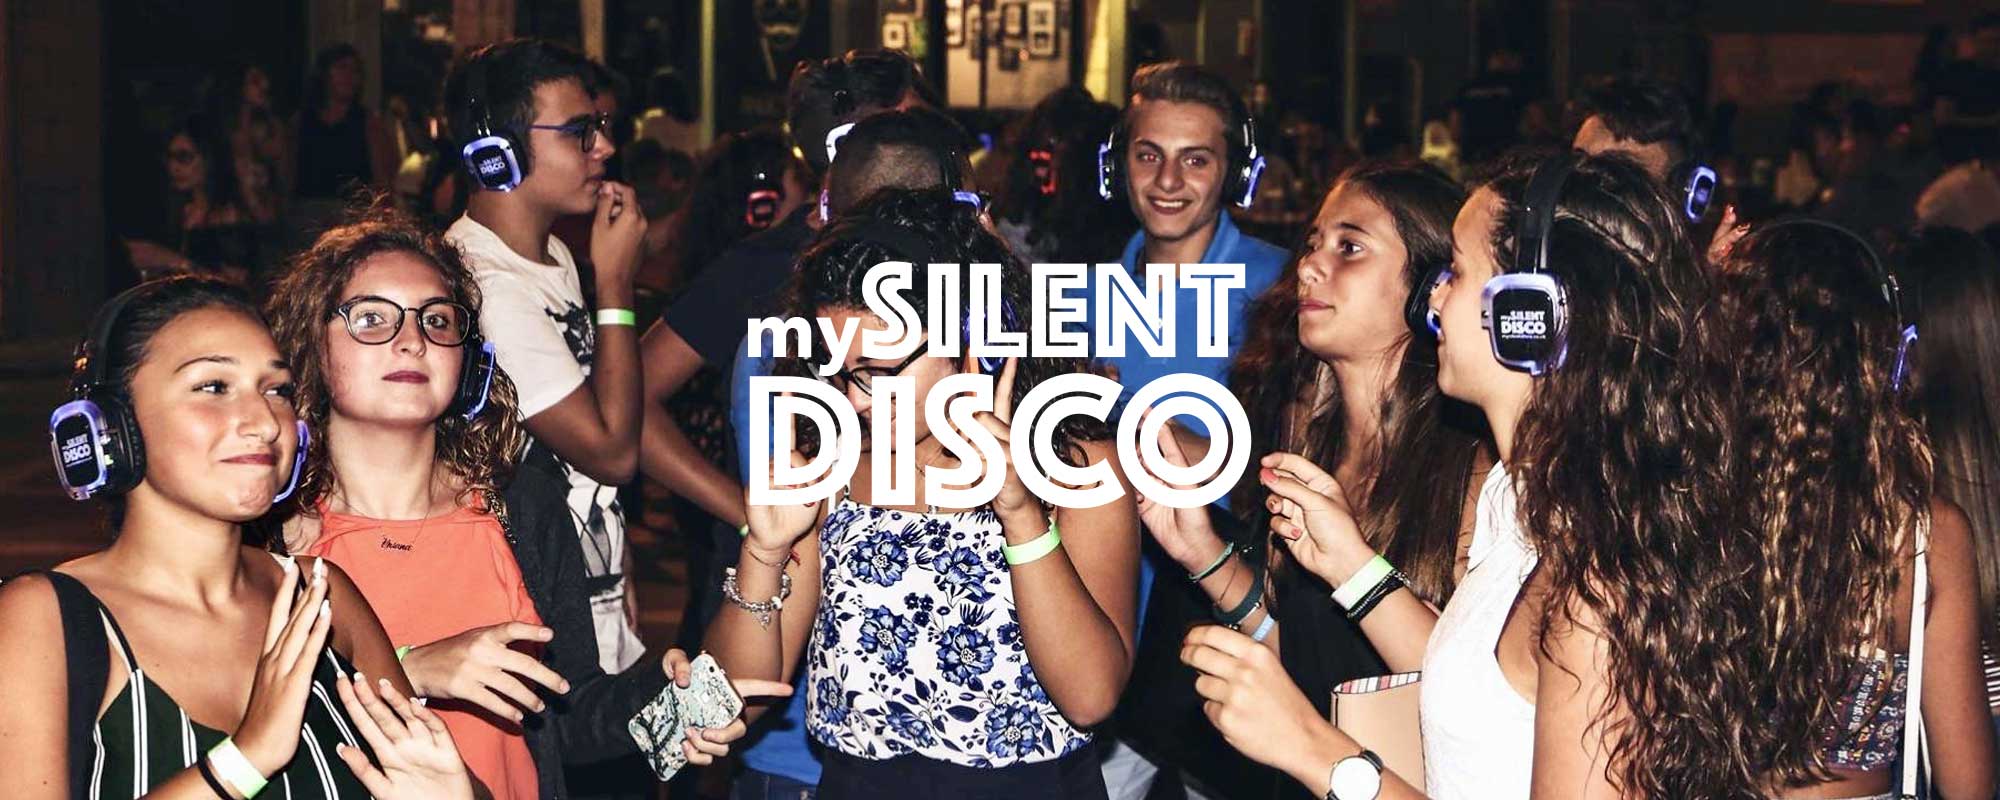 Outdoor silent disco in Italy